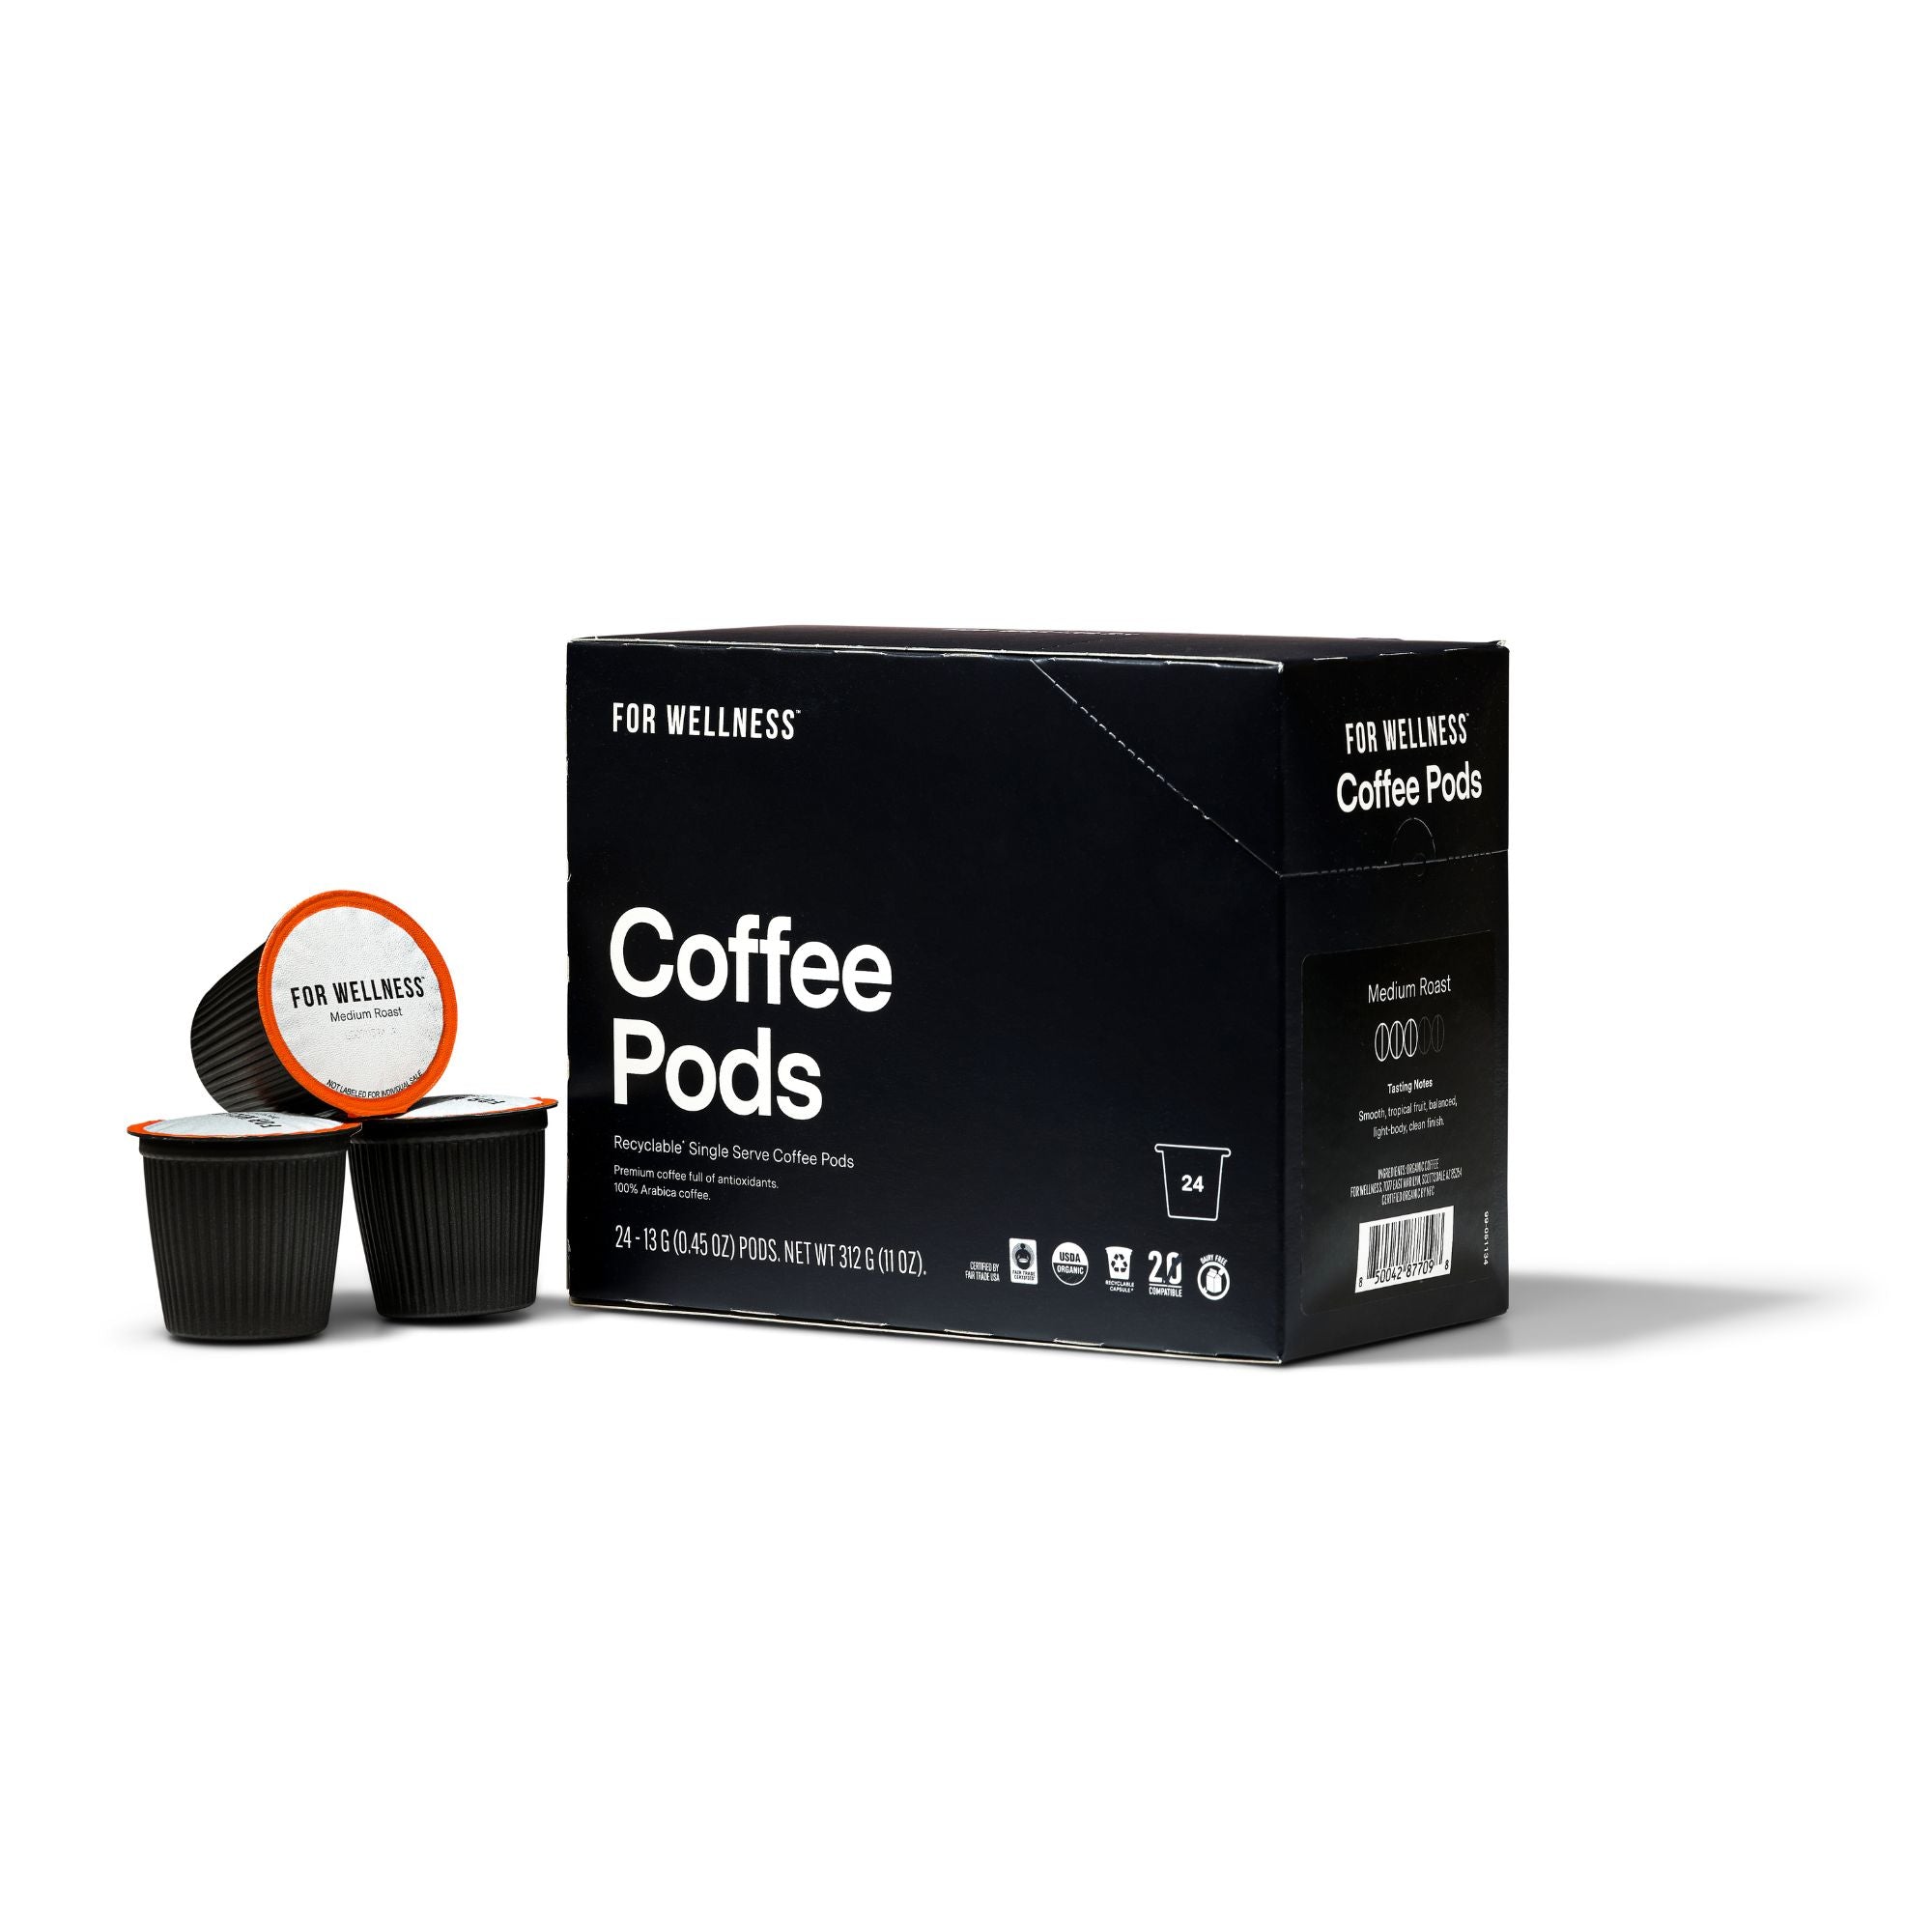 I Only Smoke the Good Stuff Coffee Mug or Coffee Cup Gift – Coffee